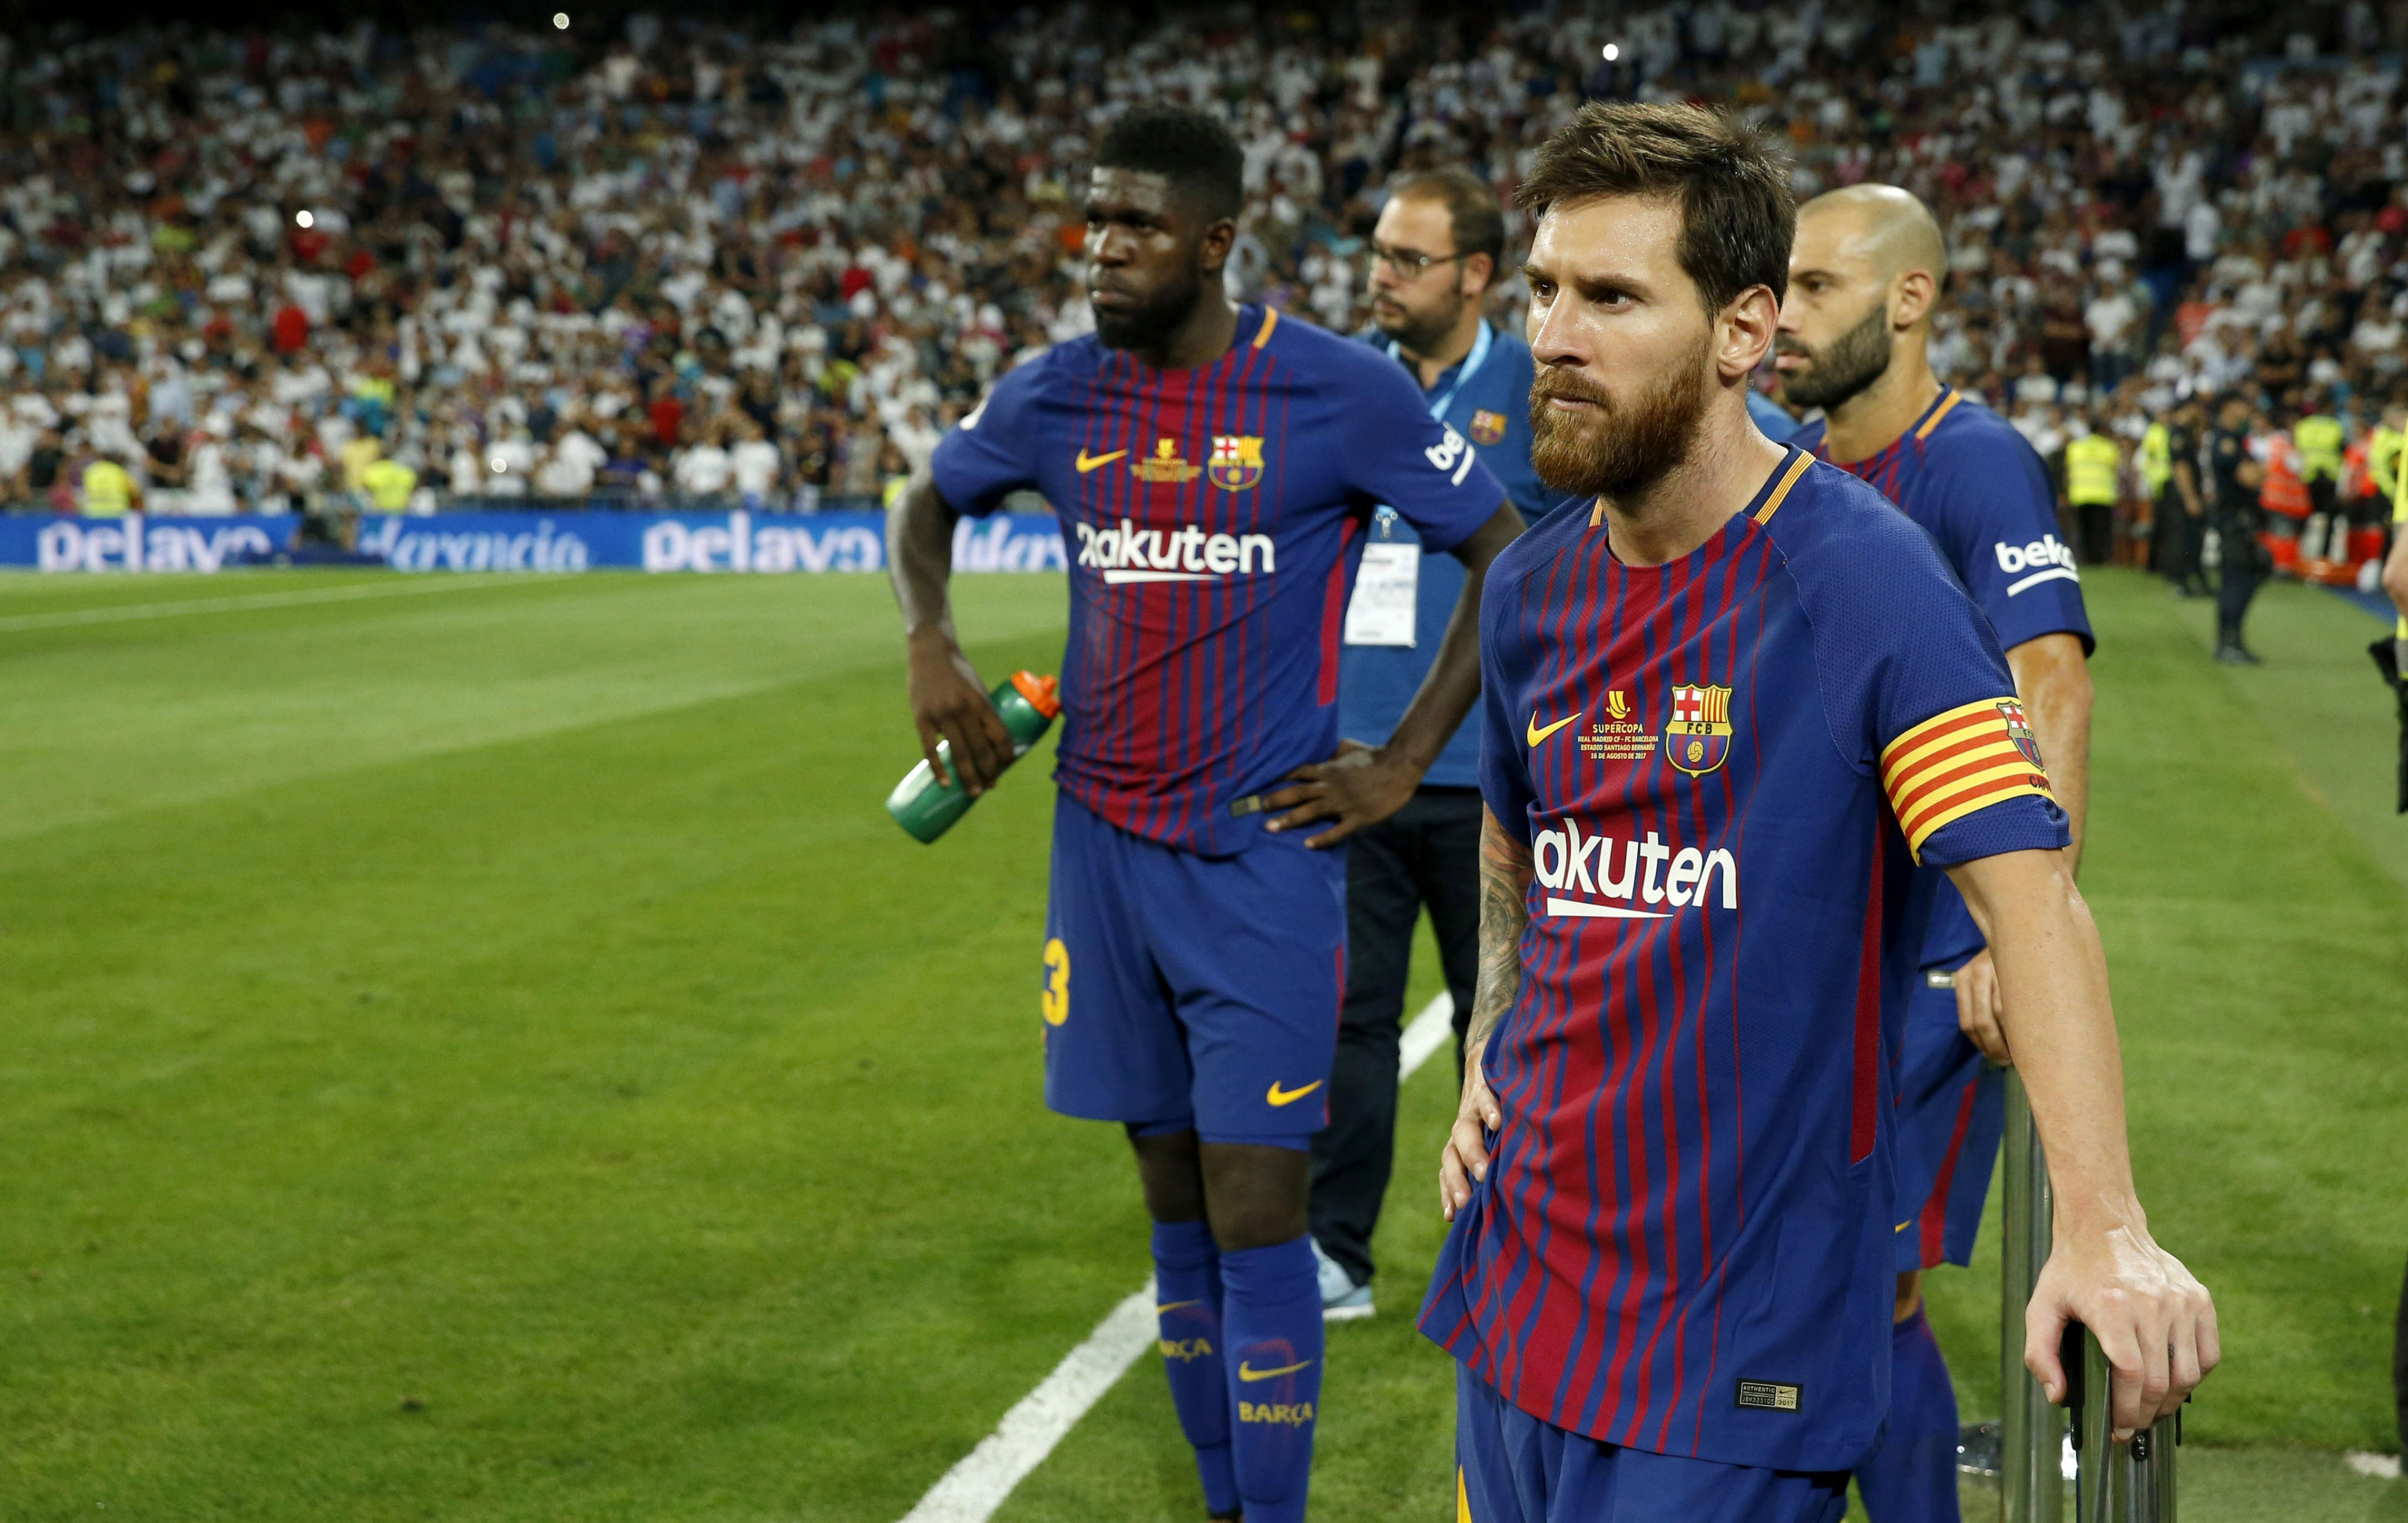 Tras atentado en Barcelona, Messi aboga por "vivir en un mundo de paz"